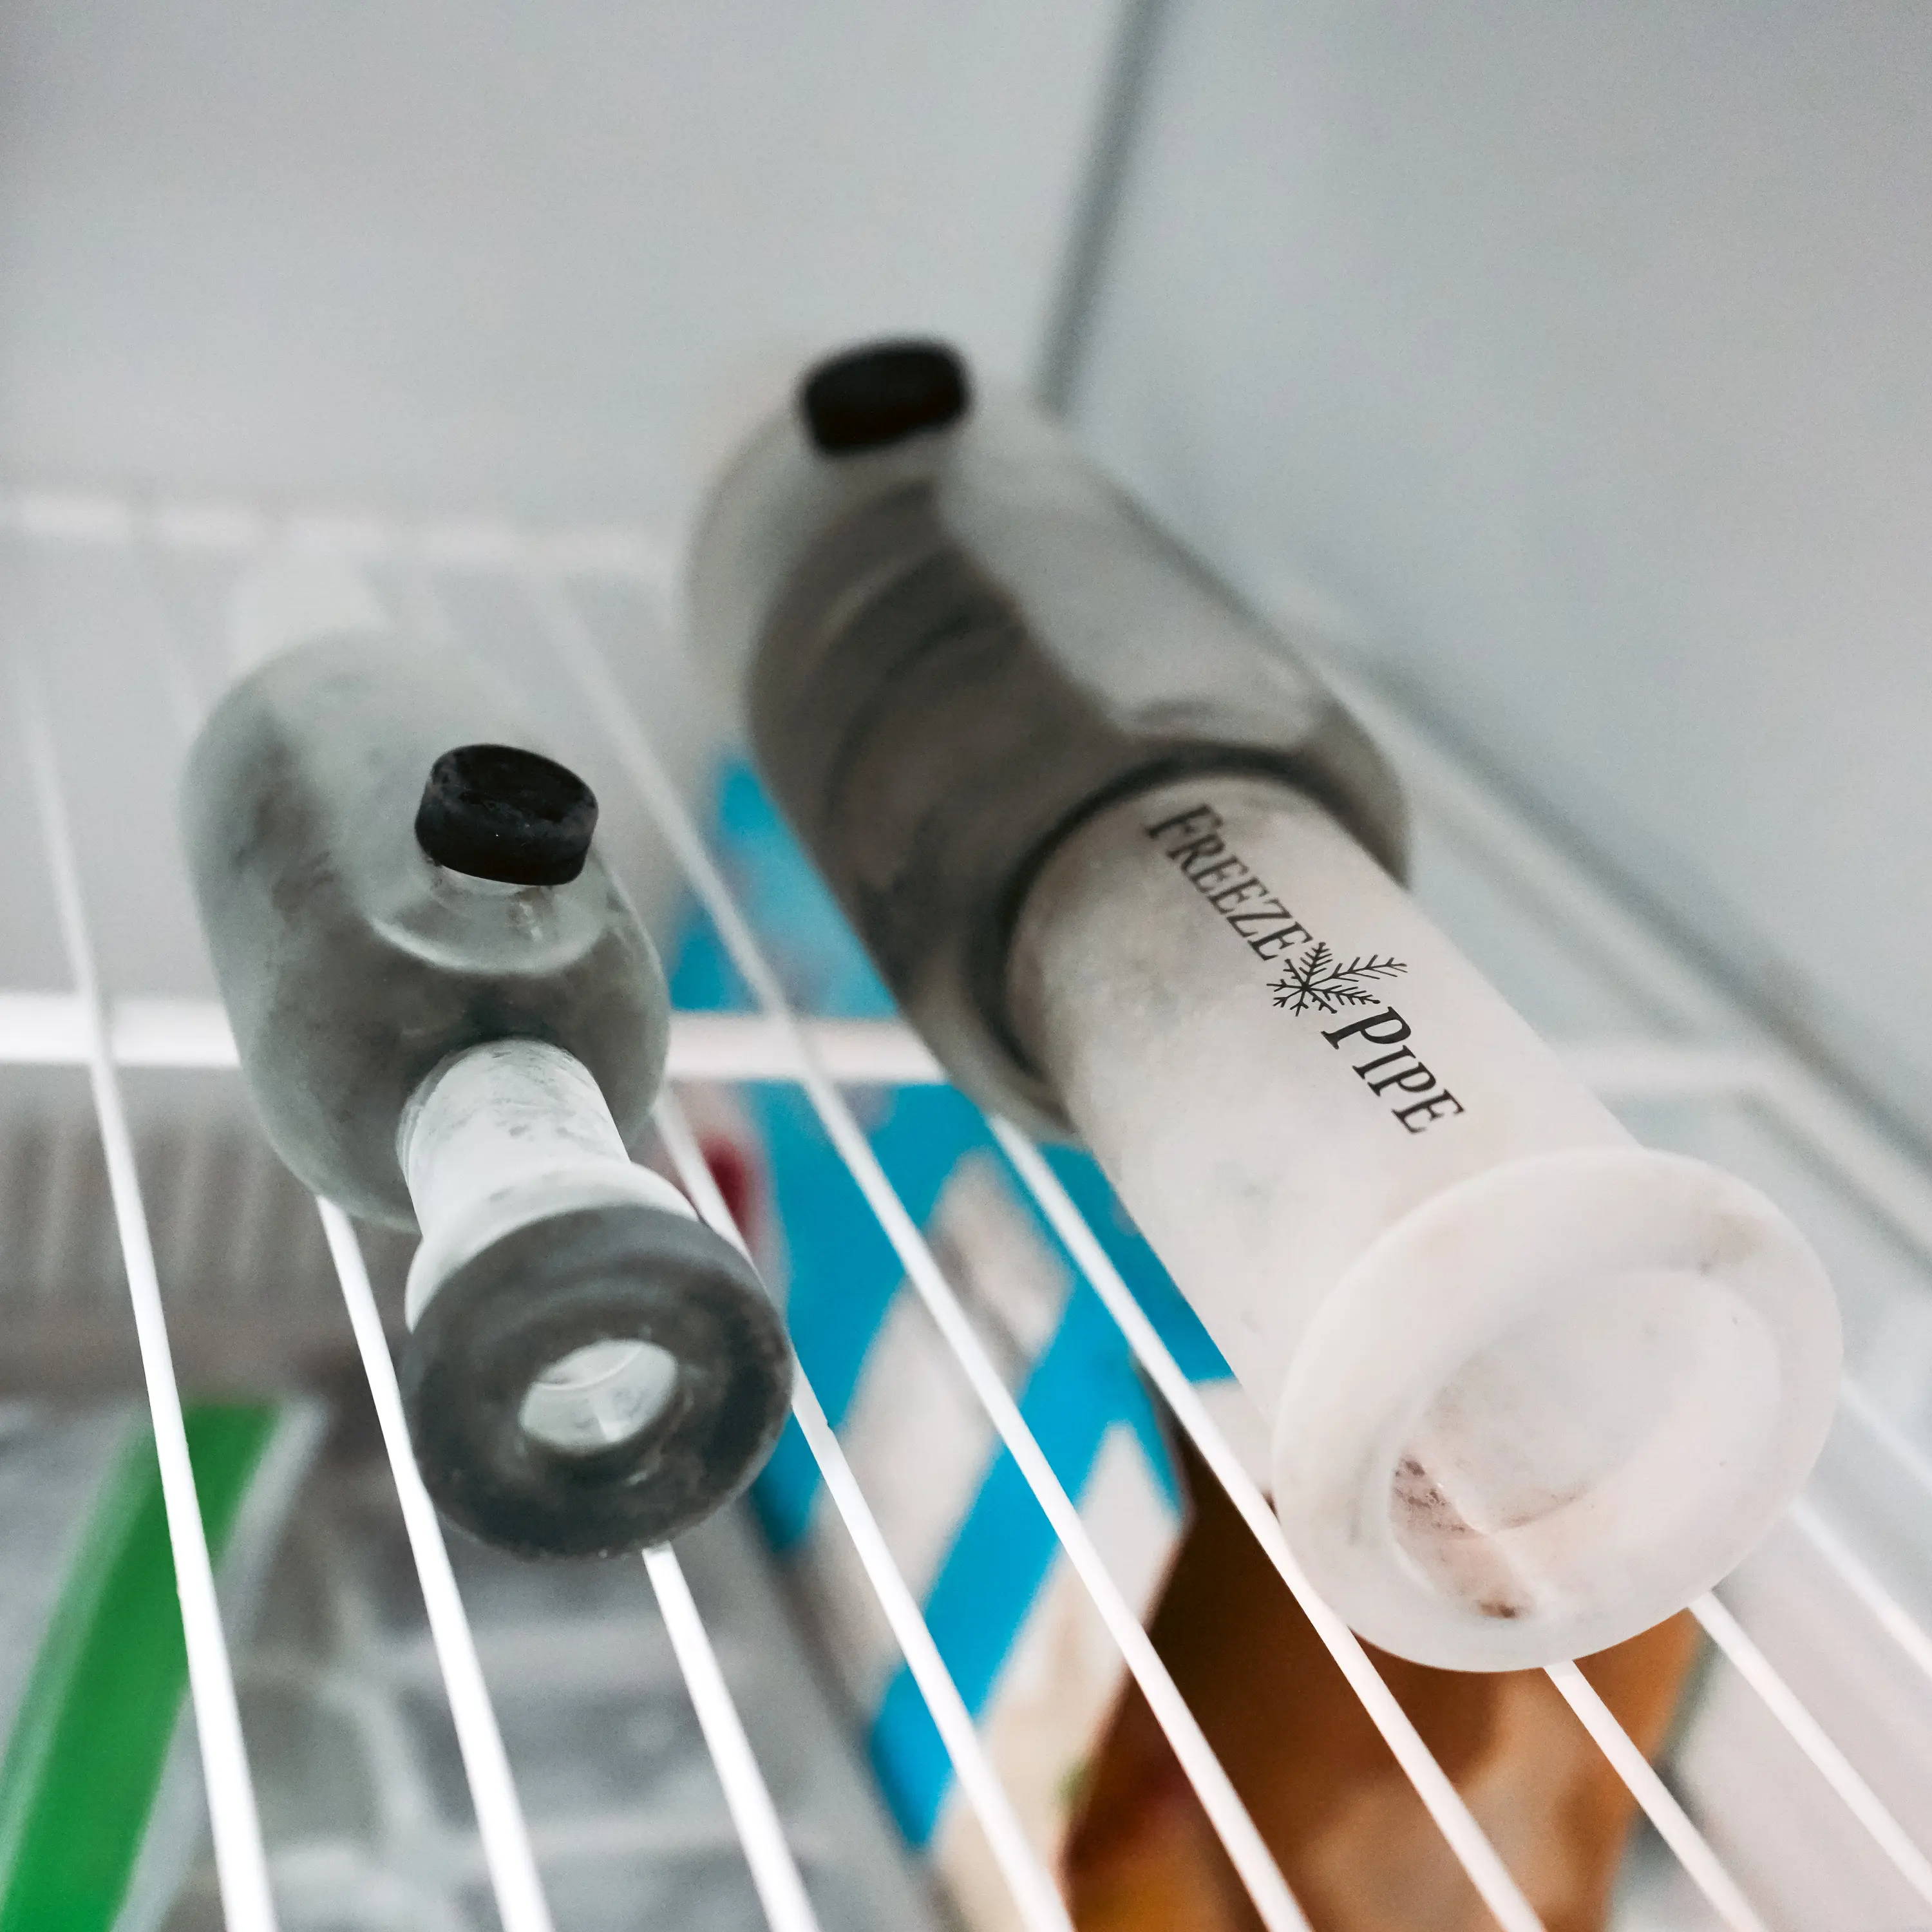 Glass spoon pipes’ detachable glycerin chambers on a freezer shelf